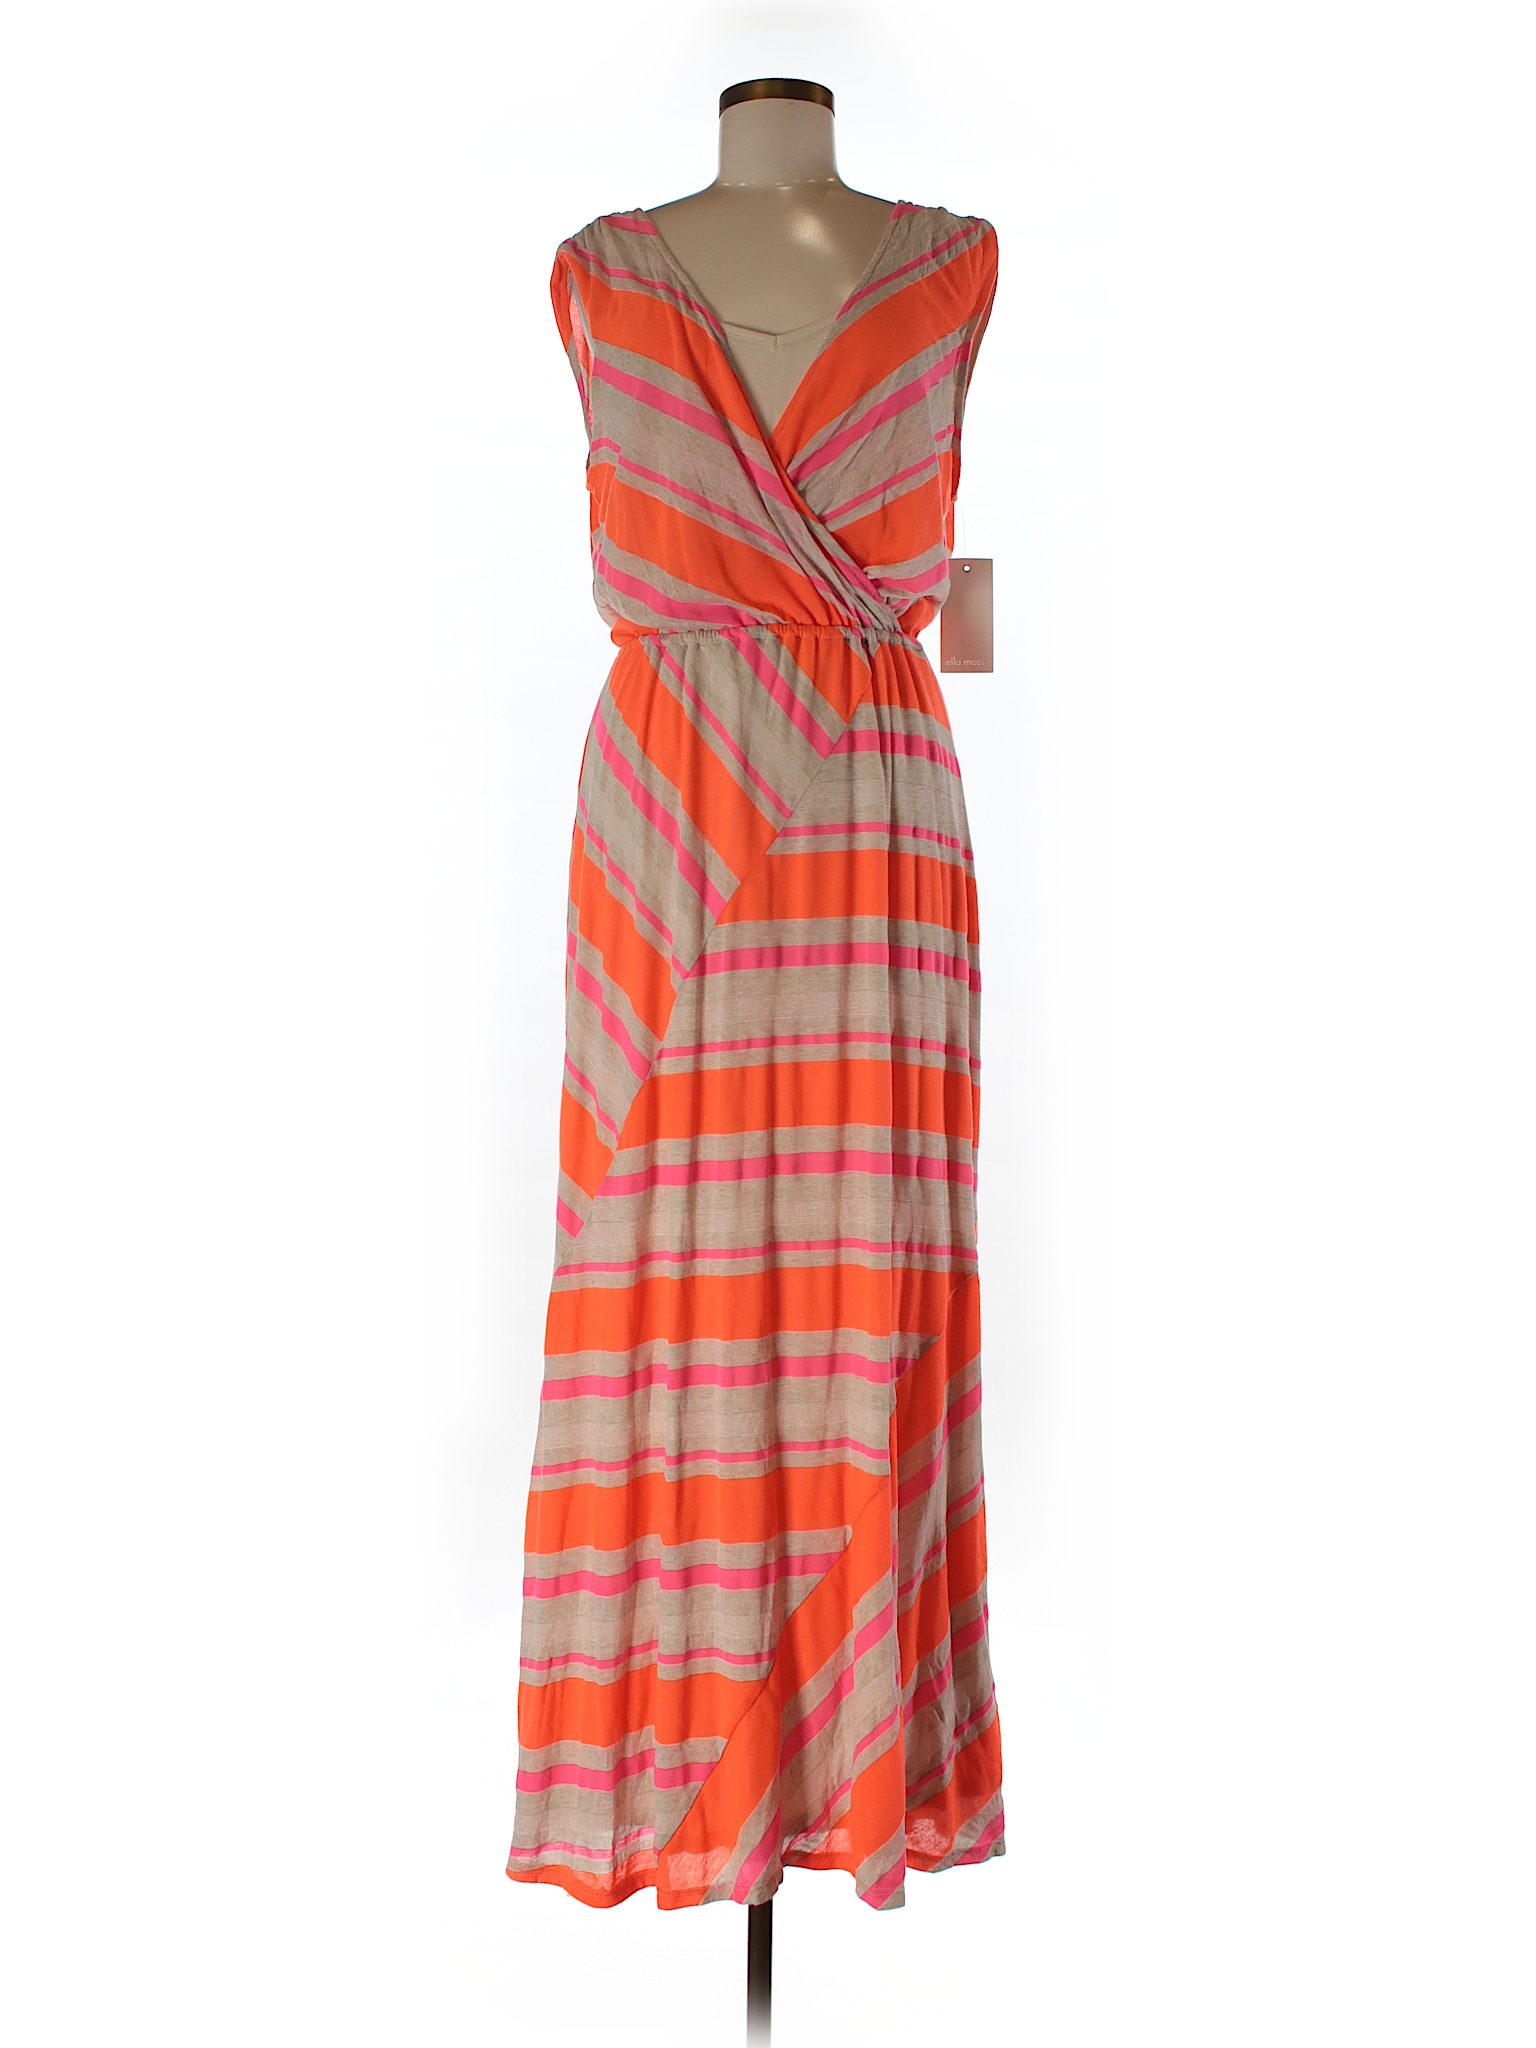 Ella Moss Stripes Beige Casual Dress Size L - 75% off | thredUP